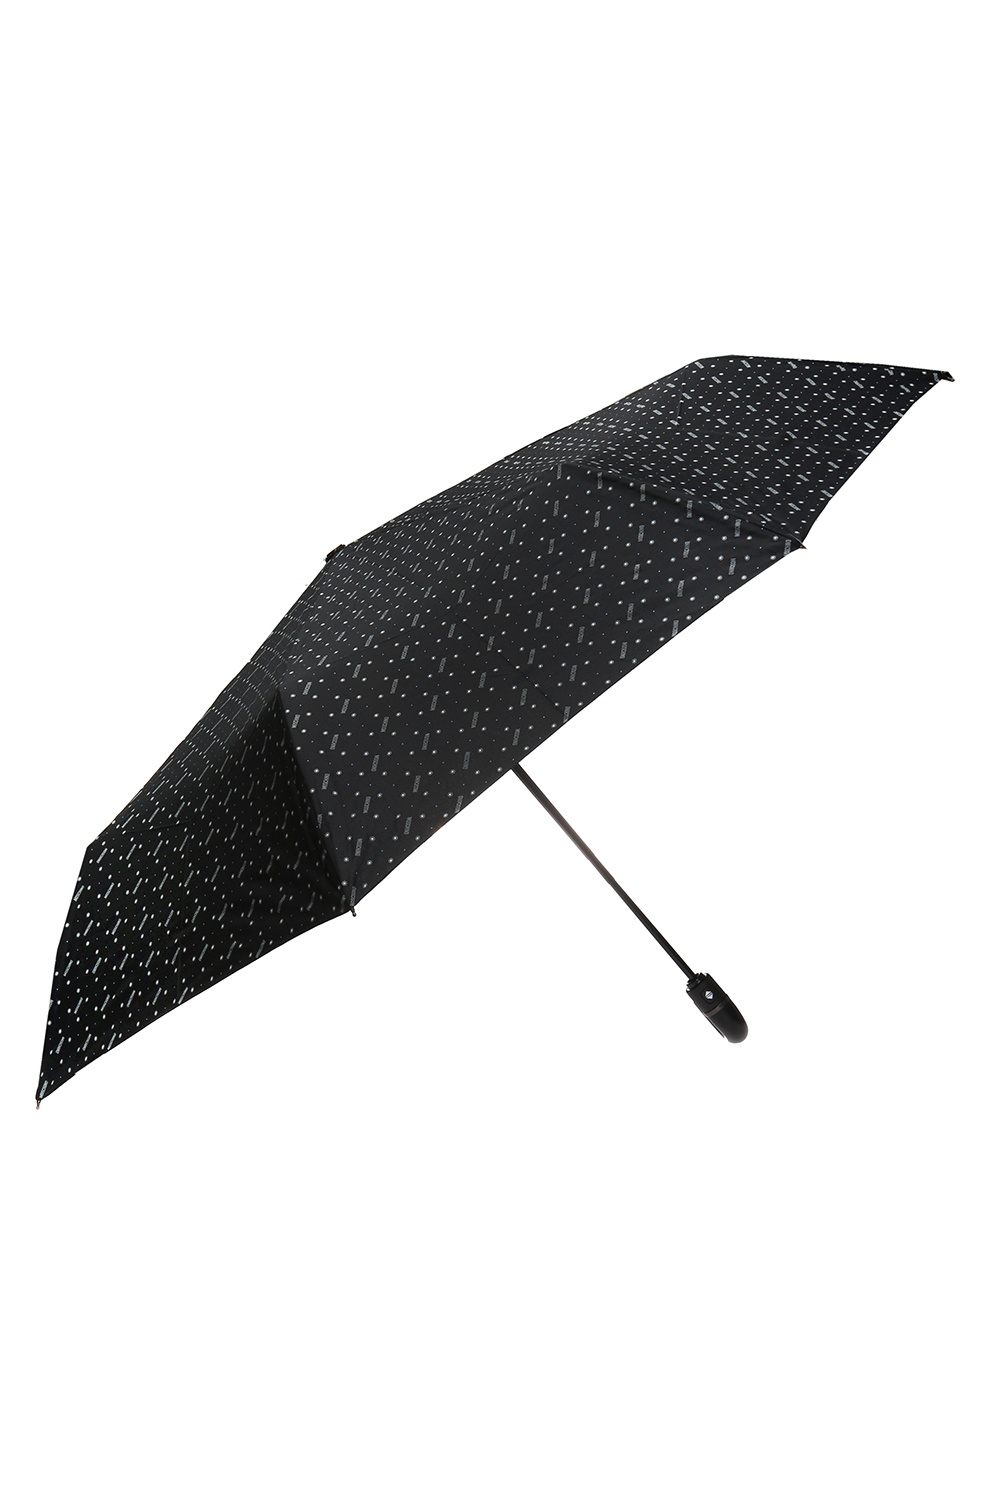 Moschino Umbrella with a print